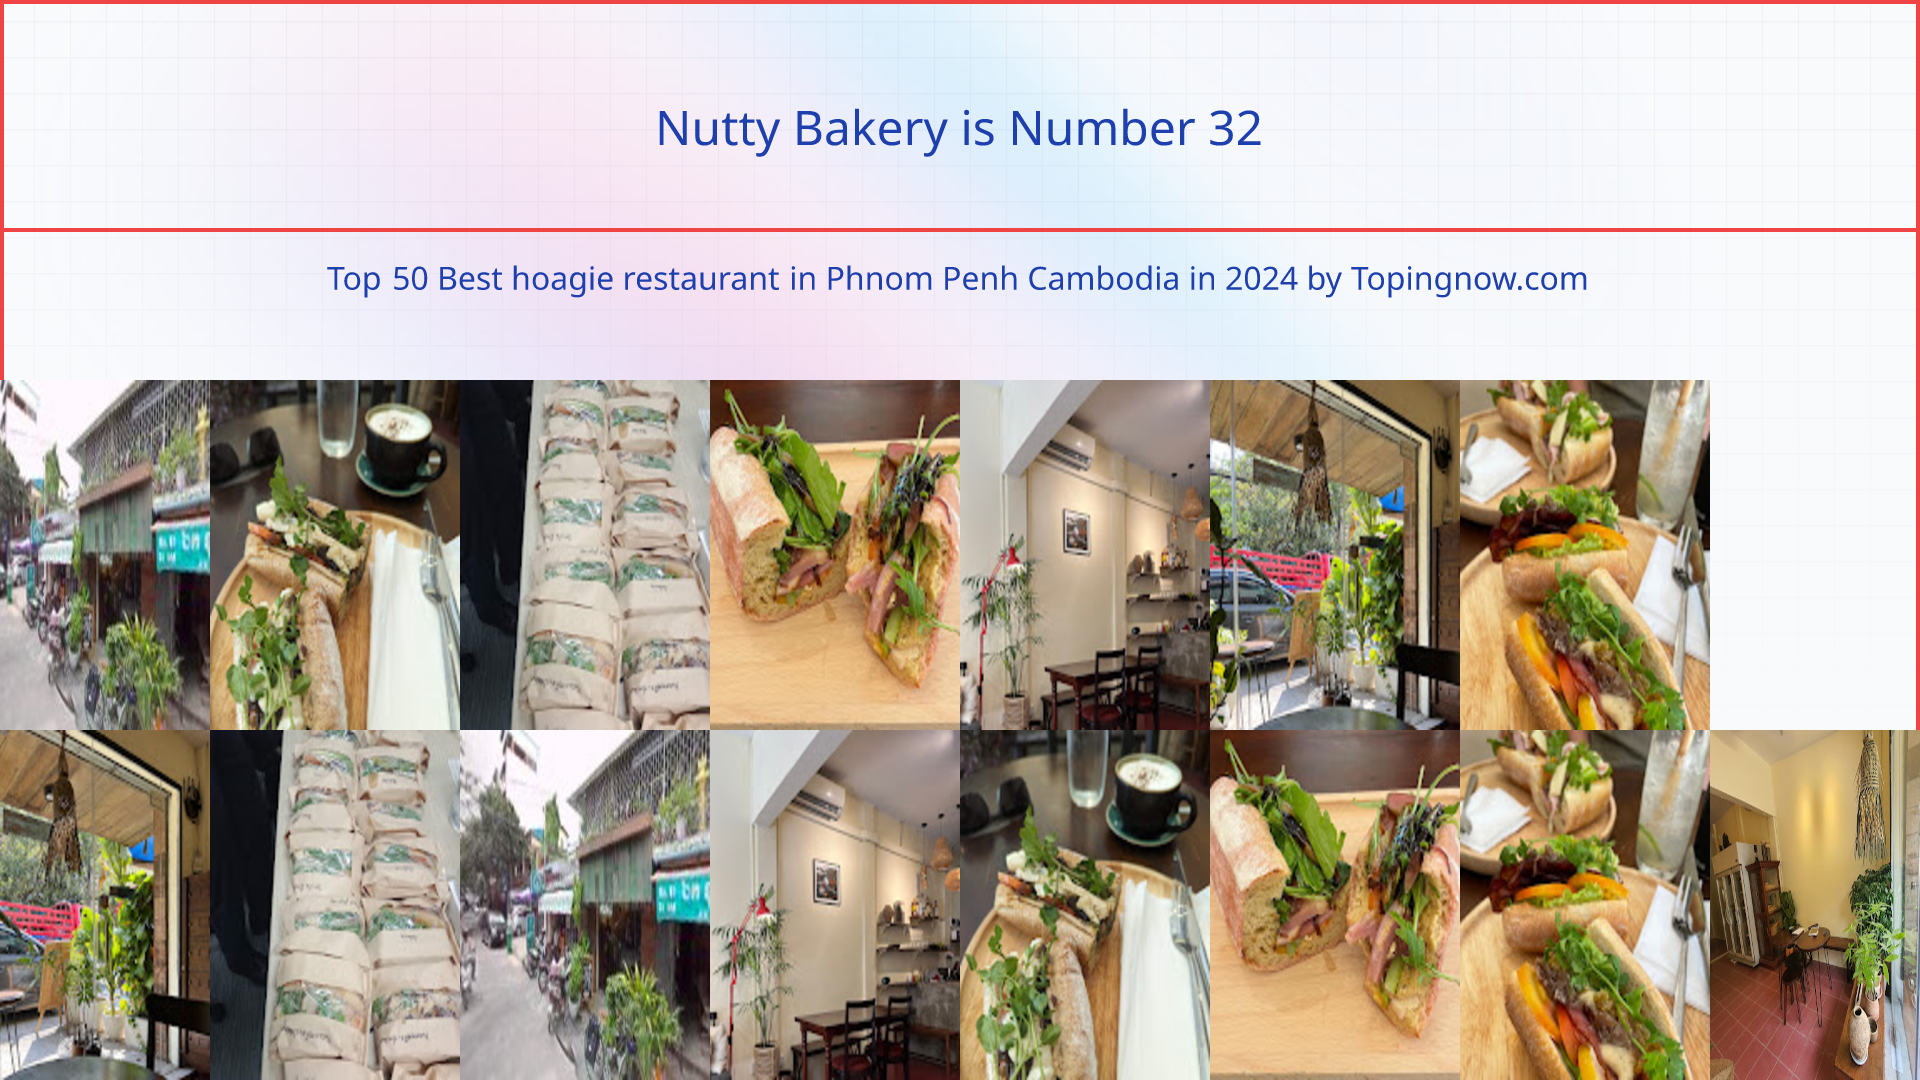 Nutty Bakery: Top 50 Best hoagie restaurant in Phnom Penh Cambodia in 2024